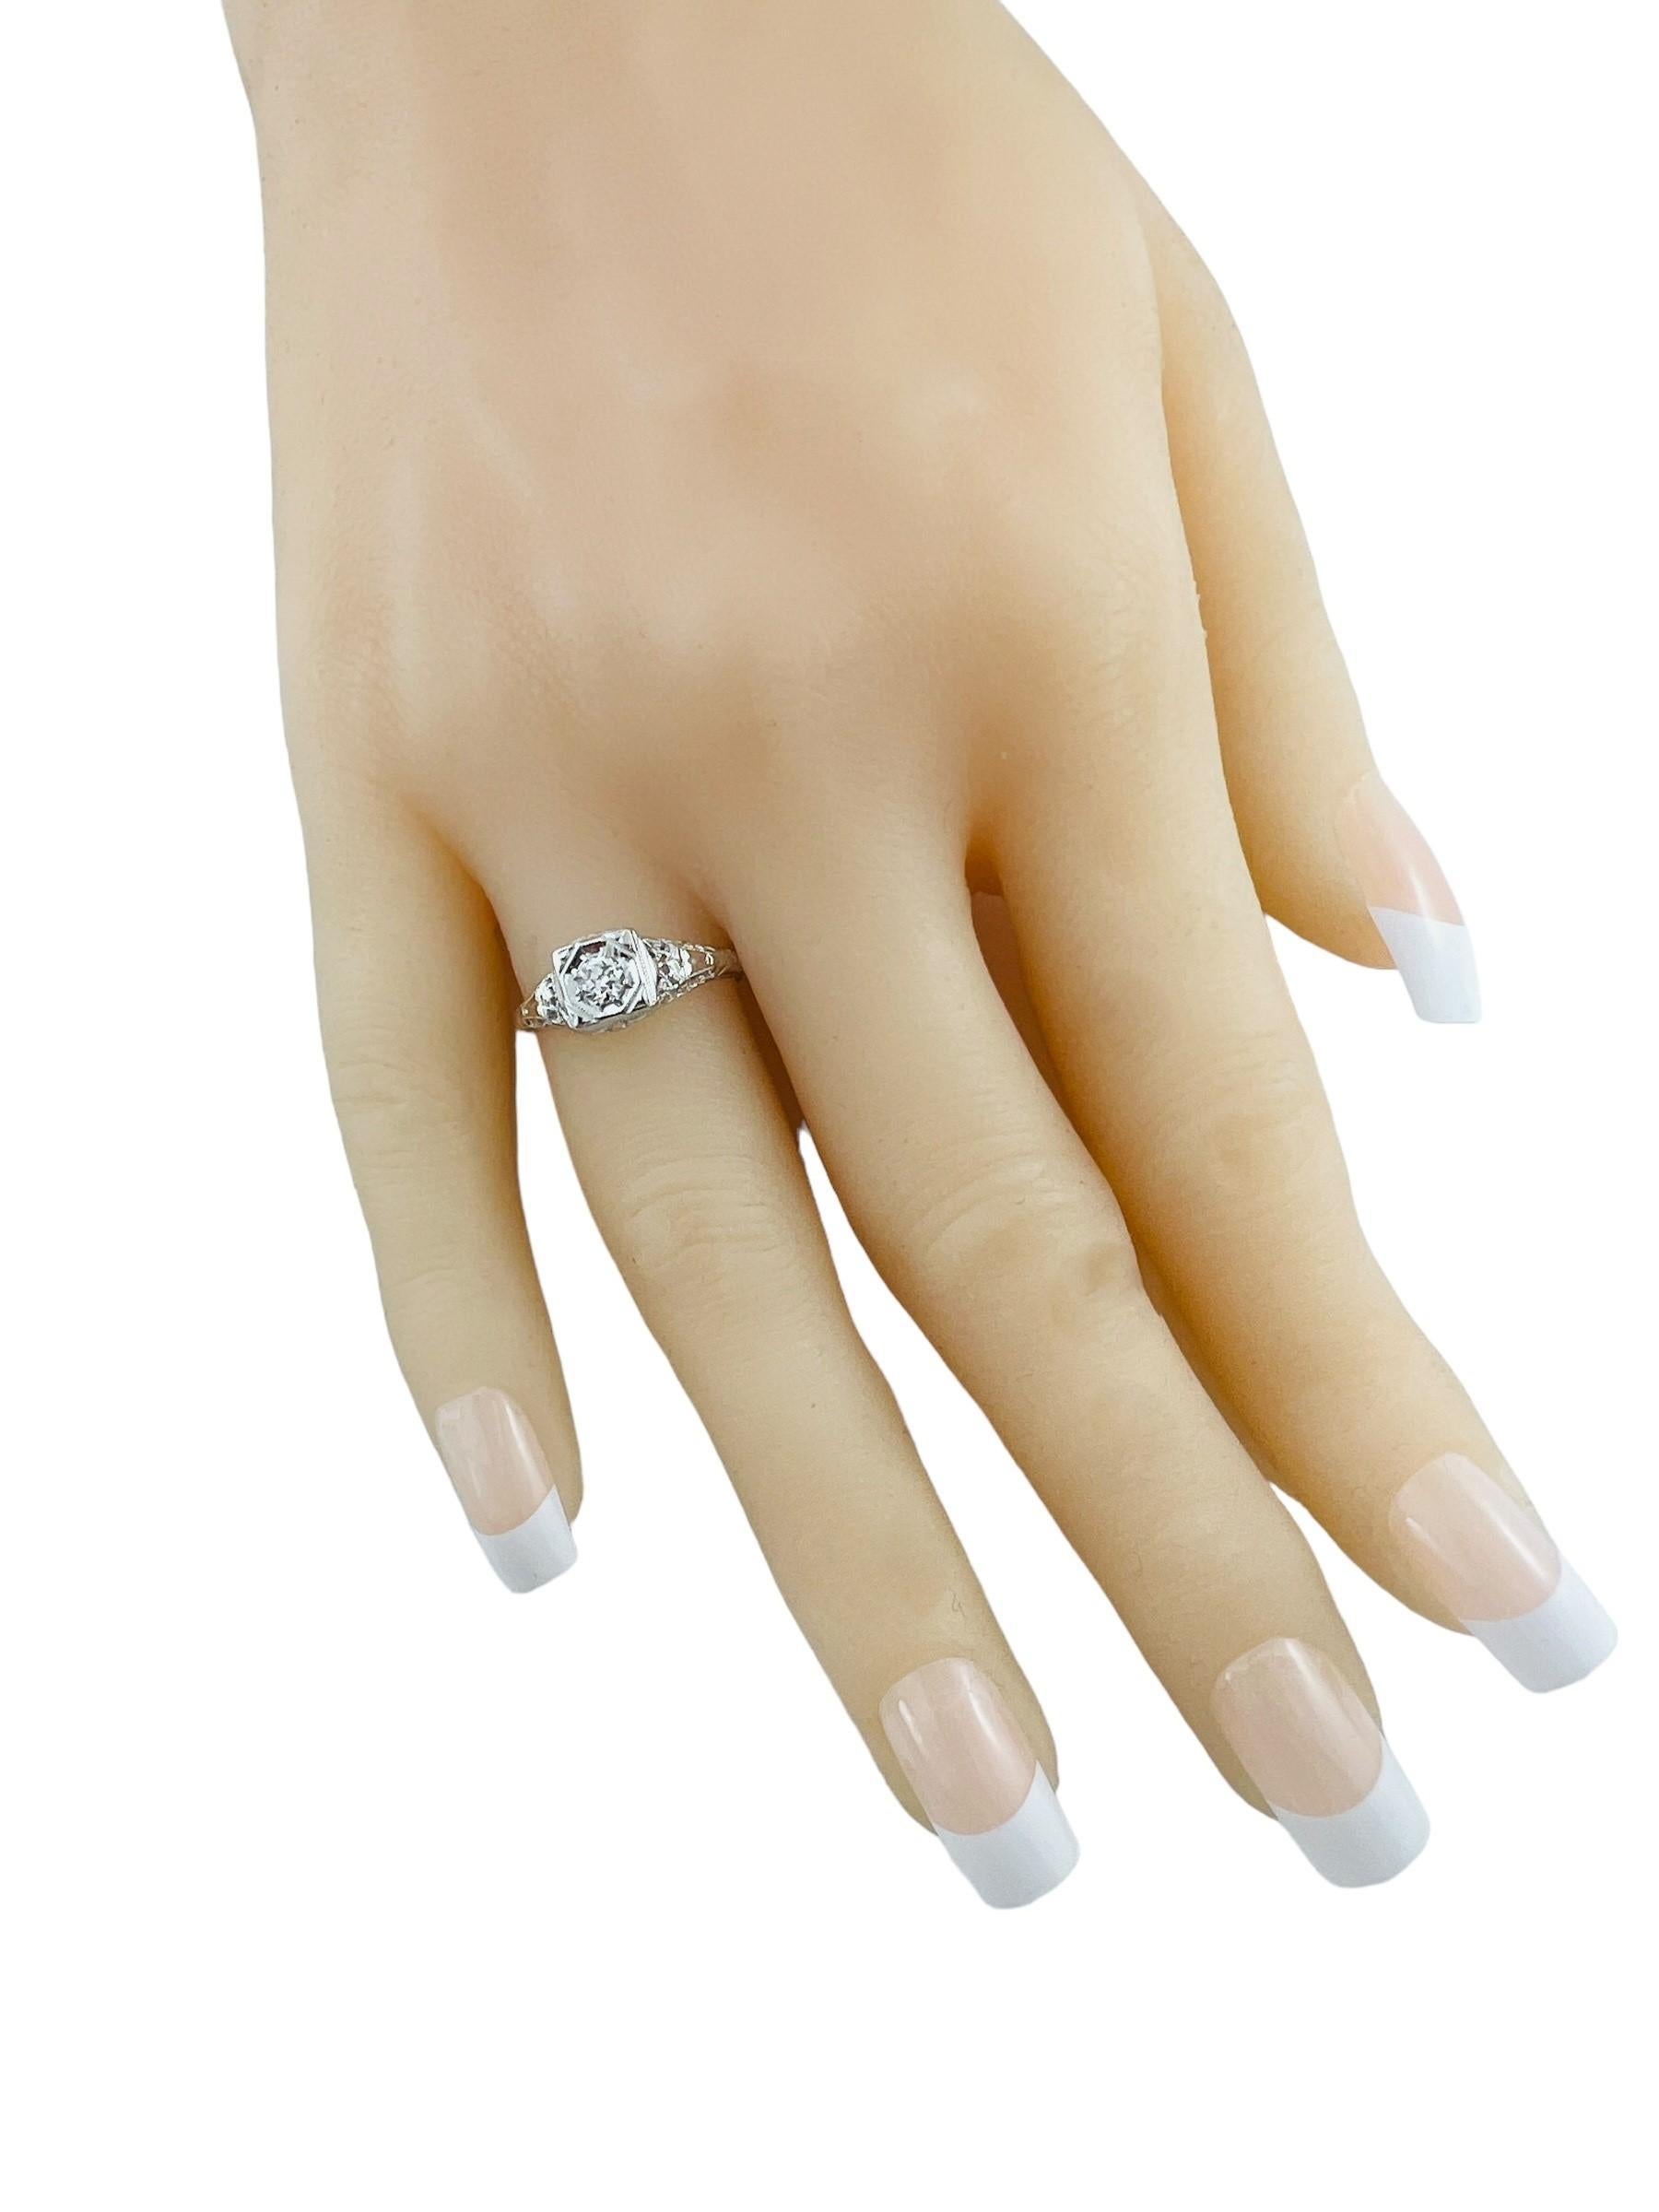 18K White Gold Filigree Diamond Ring Size 7 #16547 For Sale 4